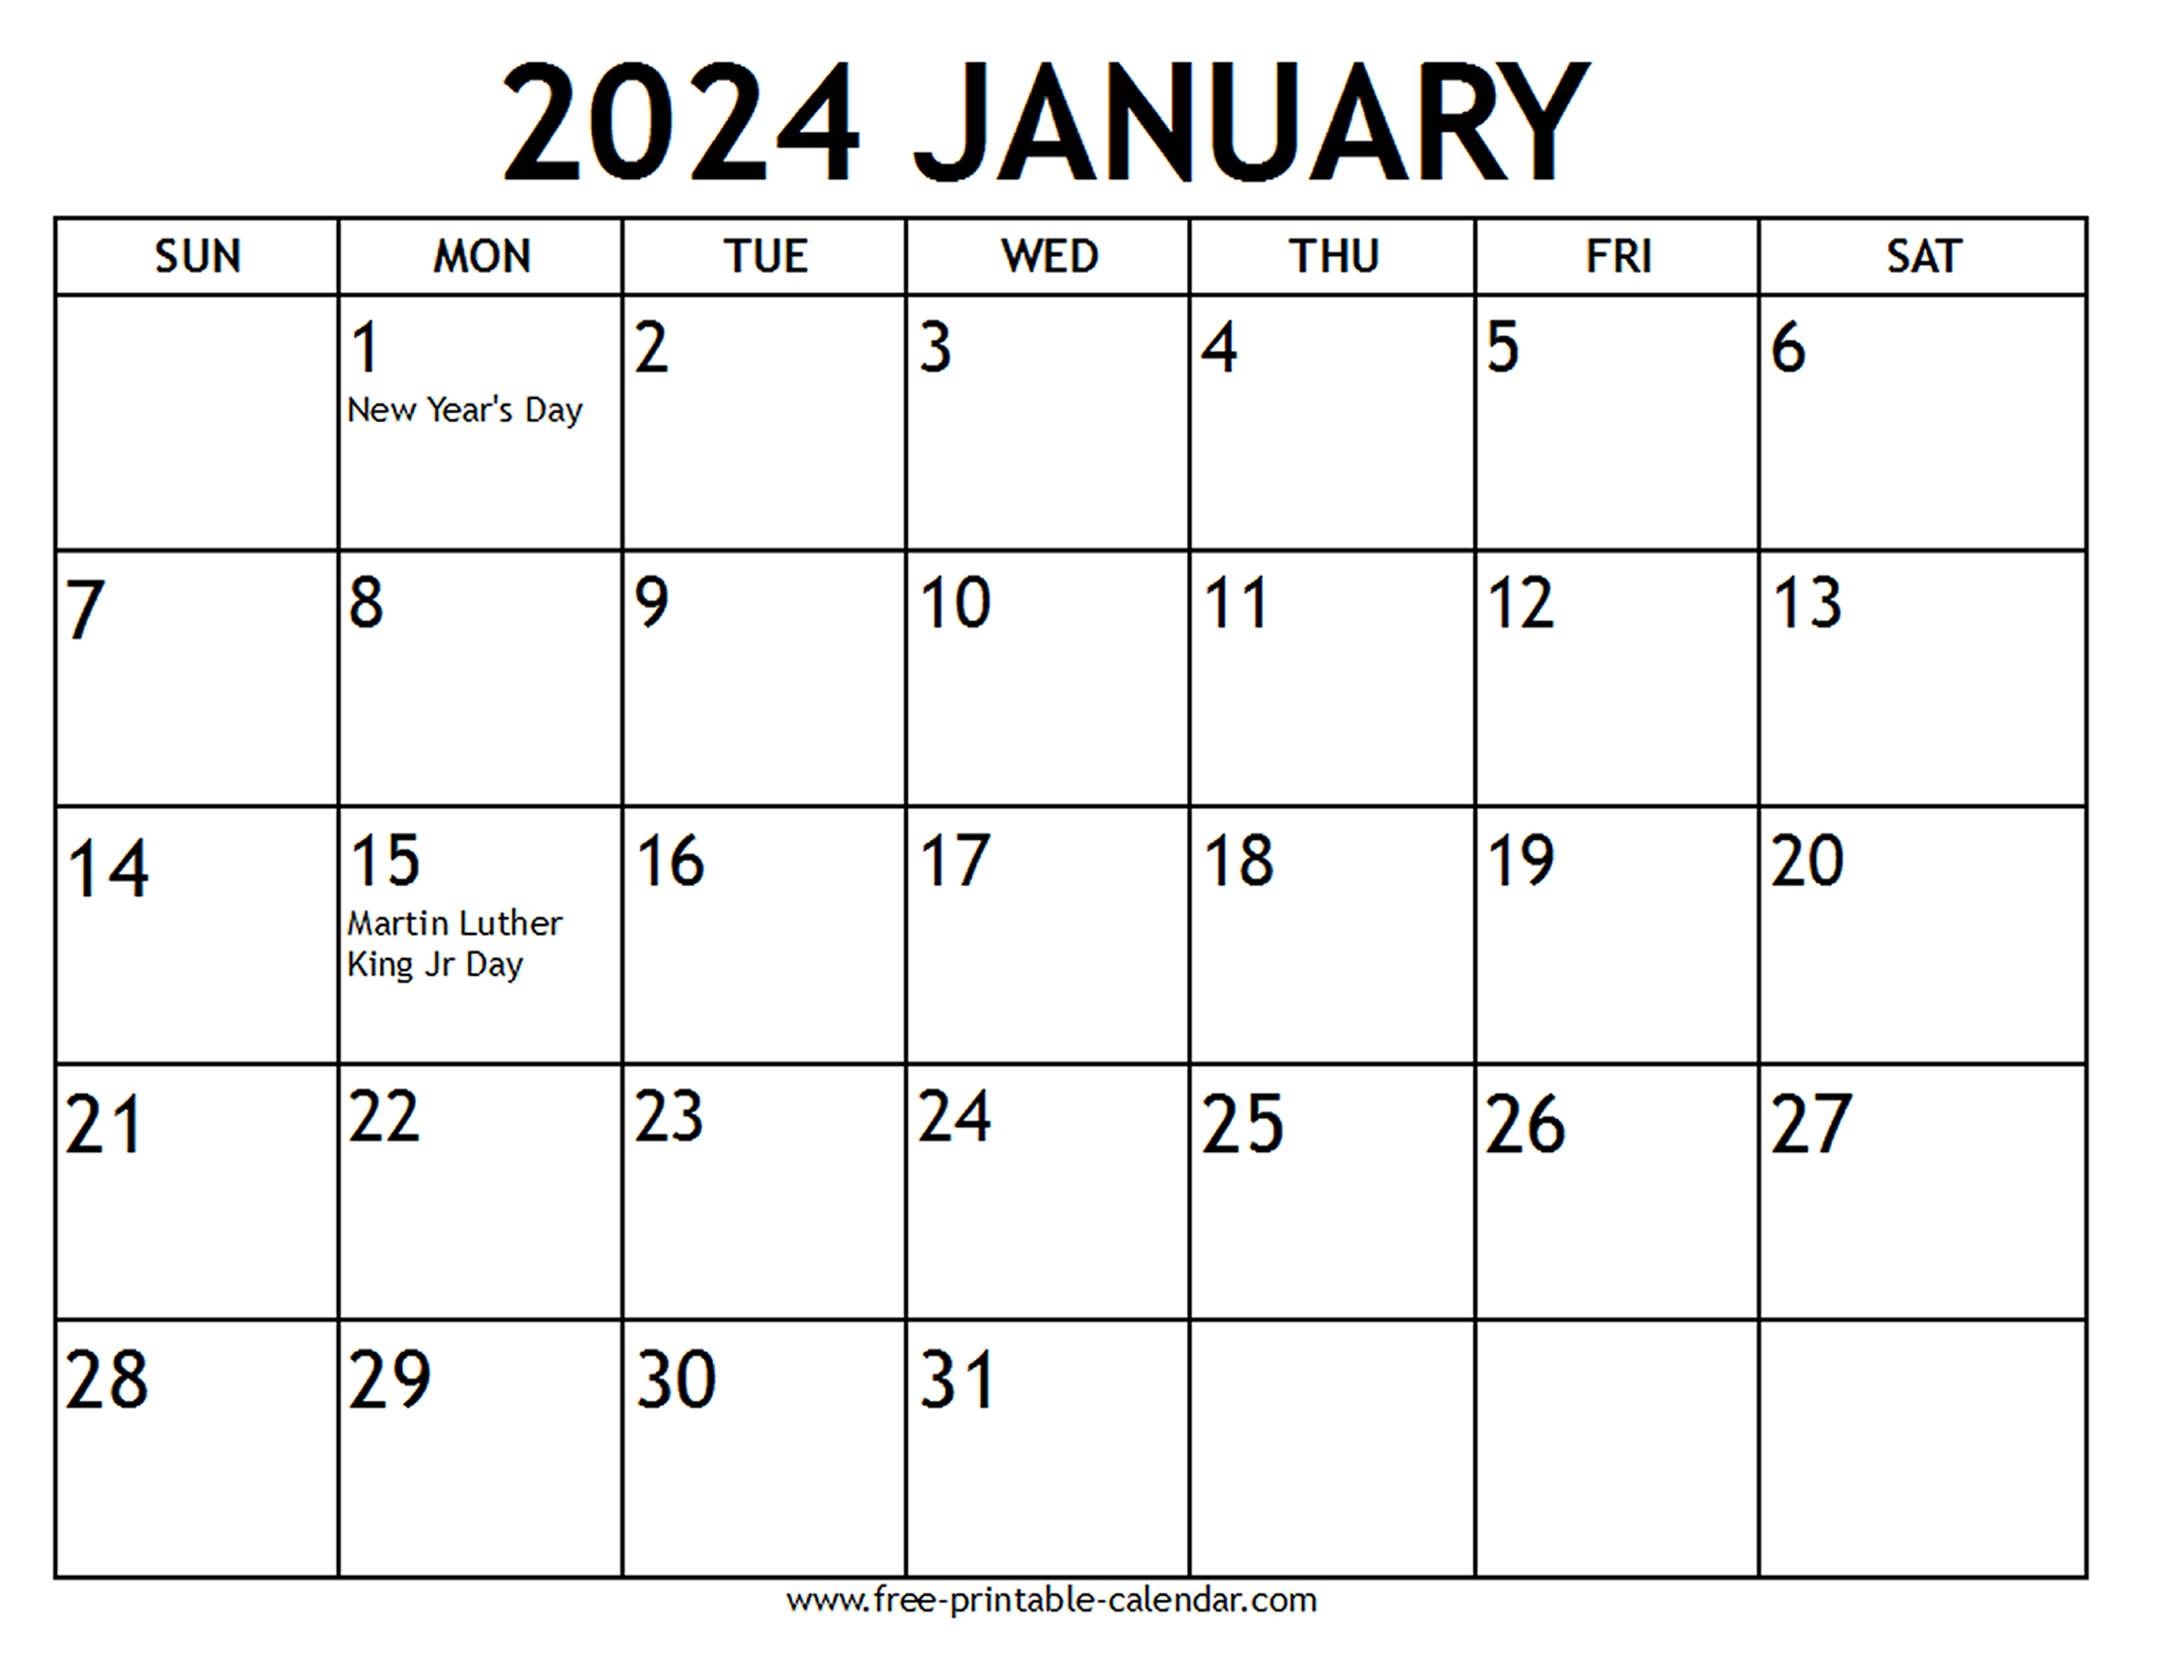 January 2024 Calendar Us Holidays - Free-Printable-Calendar with Free Printable Calendar 2024With Holidays